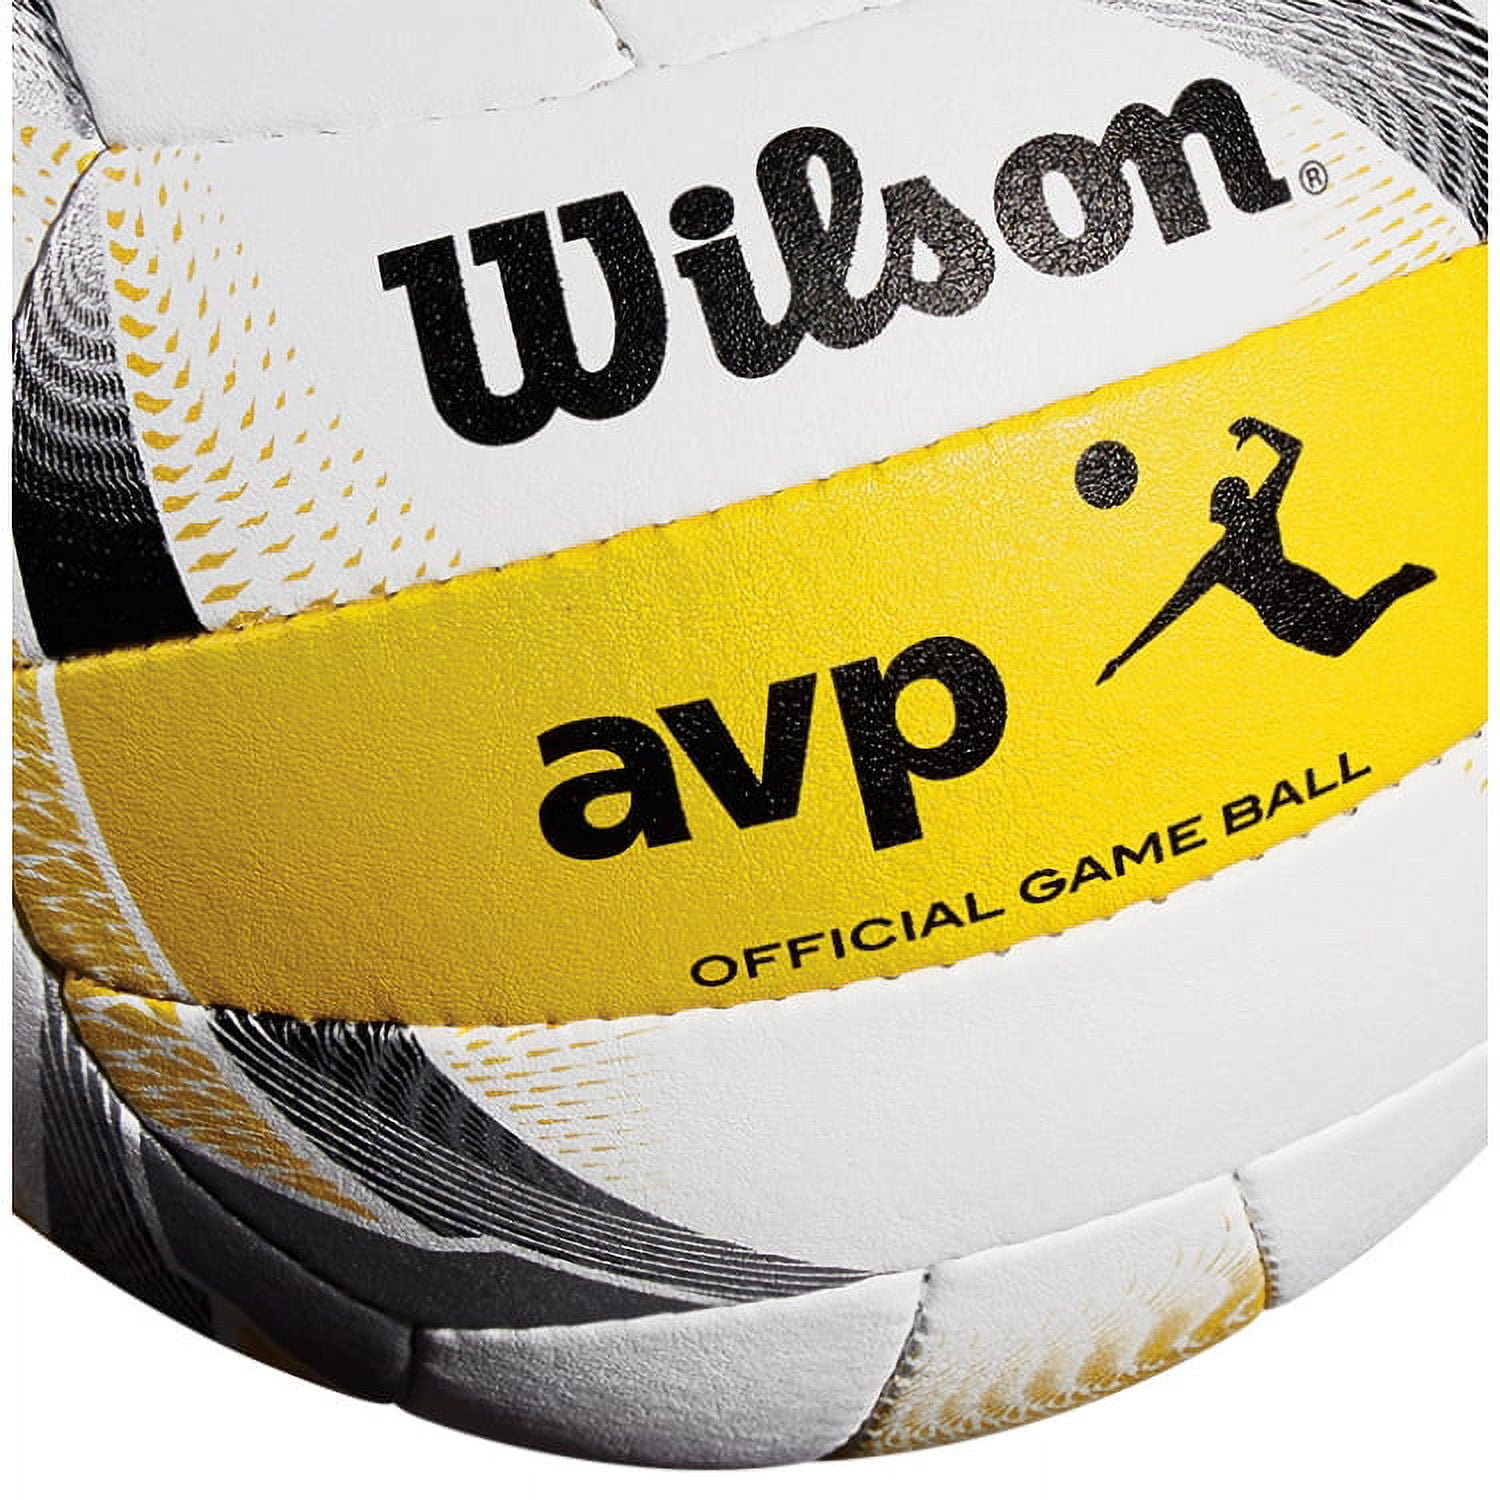 Pro Official Beach AVP Game of Tour Volleyball Wilson Ball